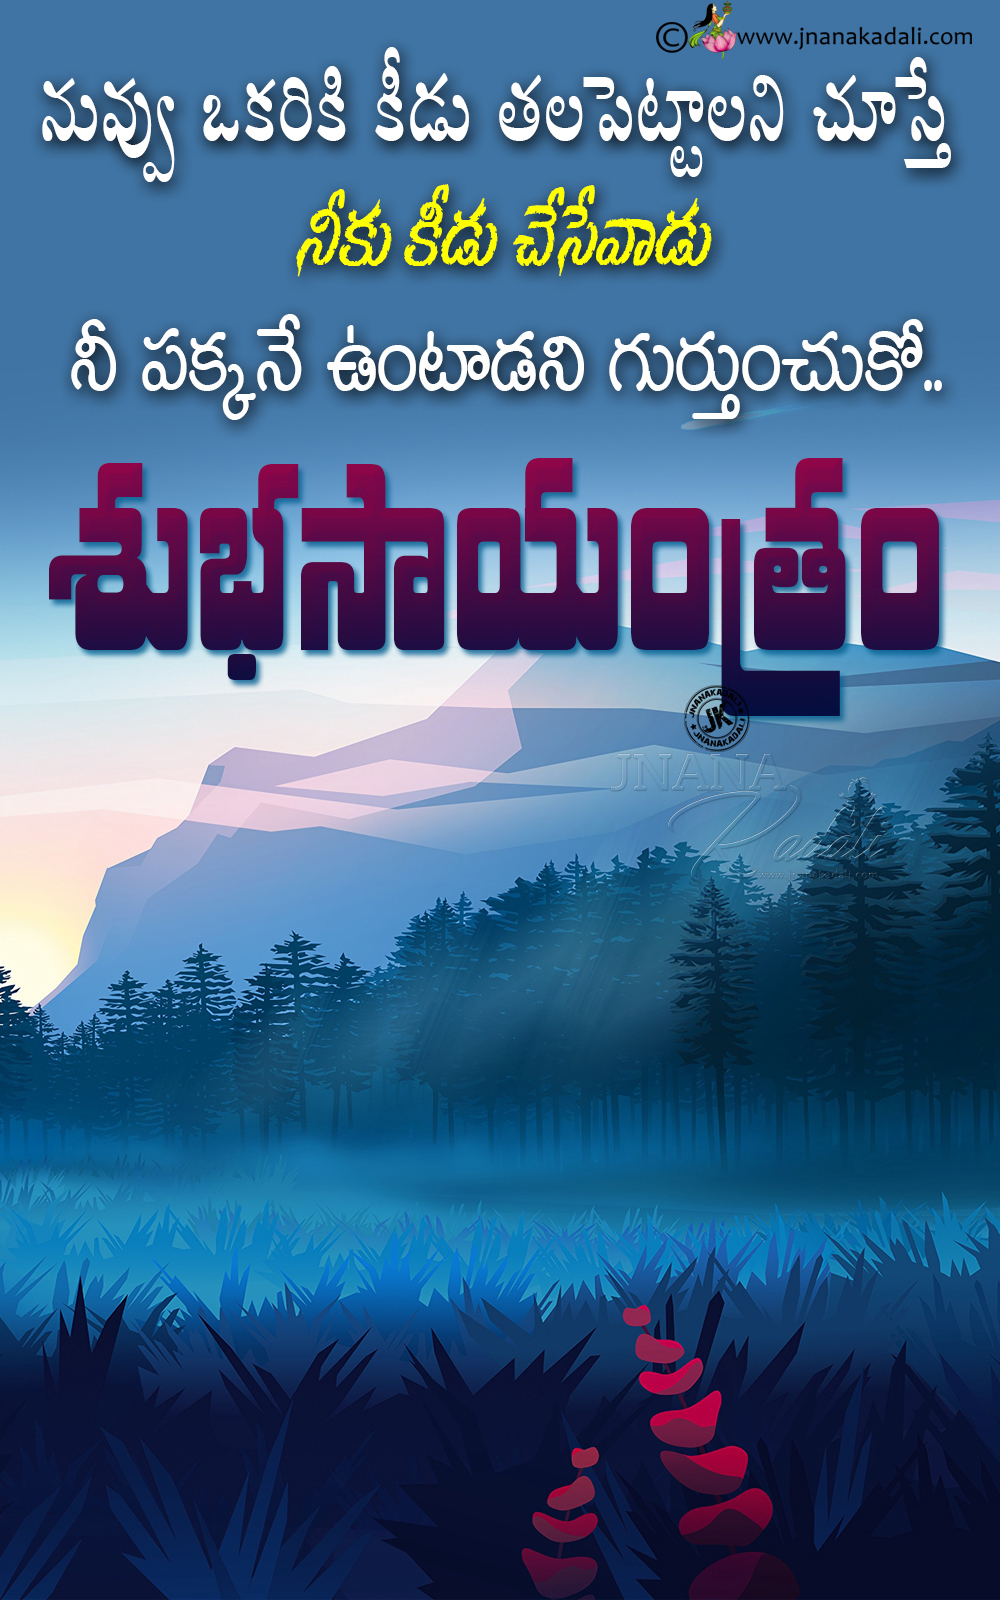 Telugu Subhasayantram quotes hd wallpapers-good evening Telugu ...